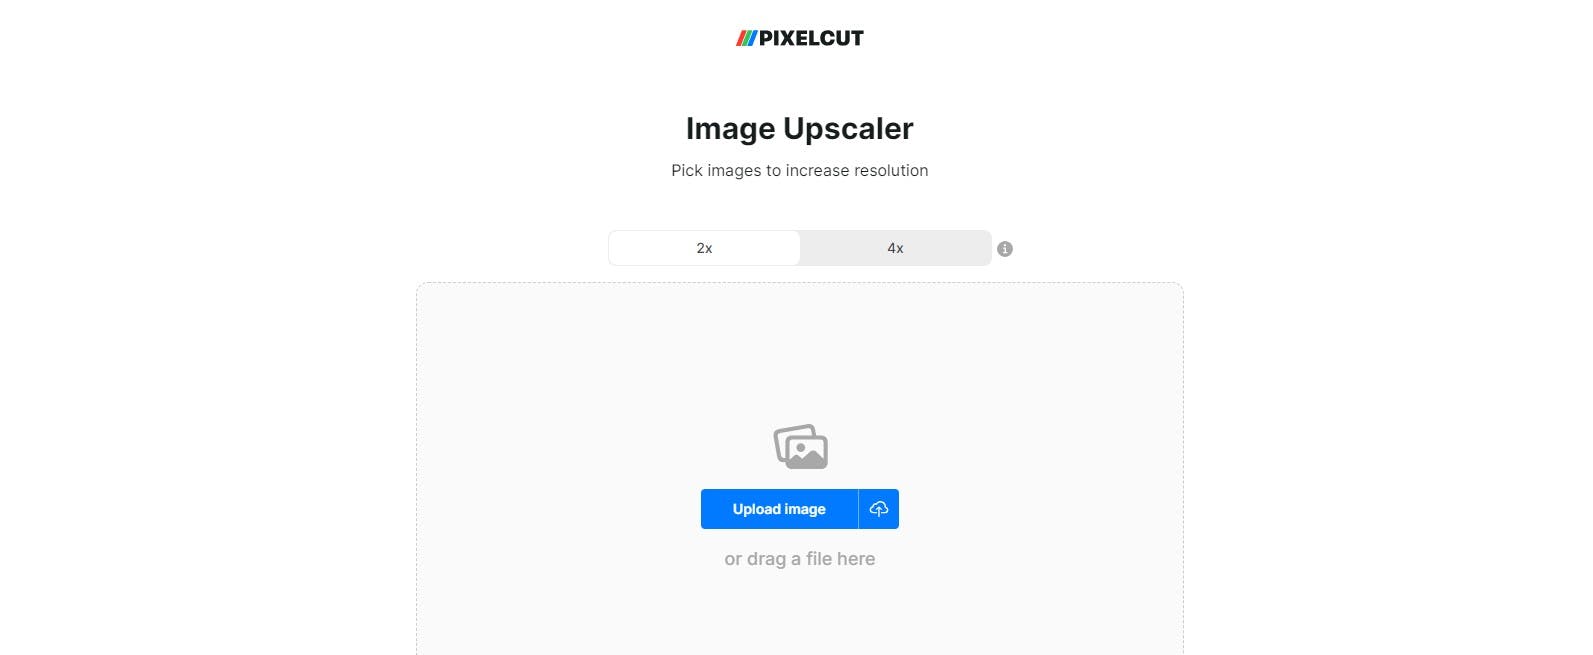 Pixelcut AI image upscaler